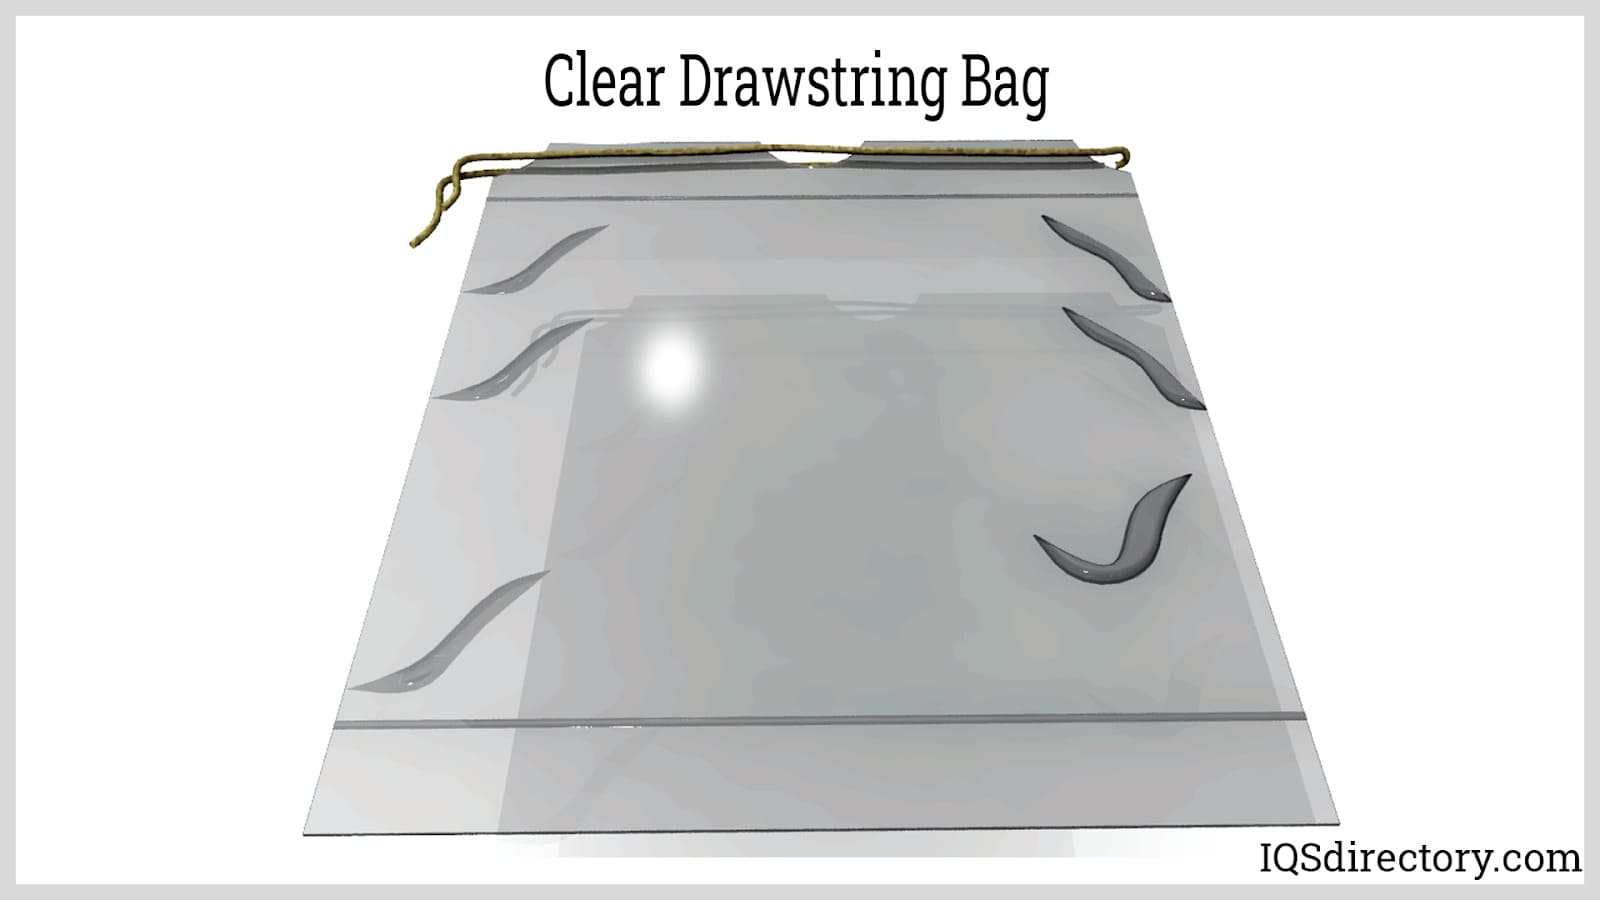 Clear Drawstring Bag